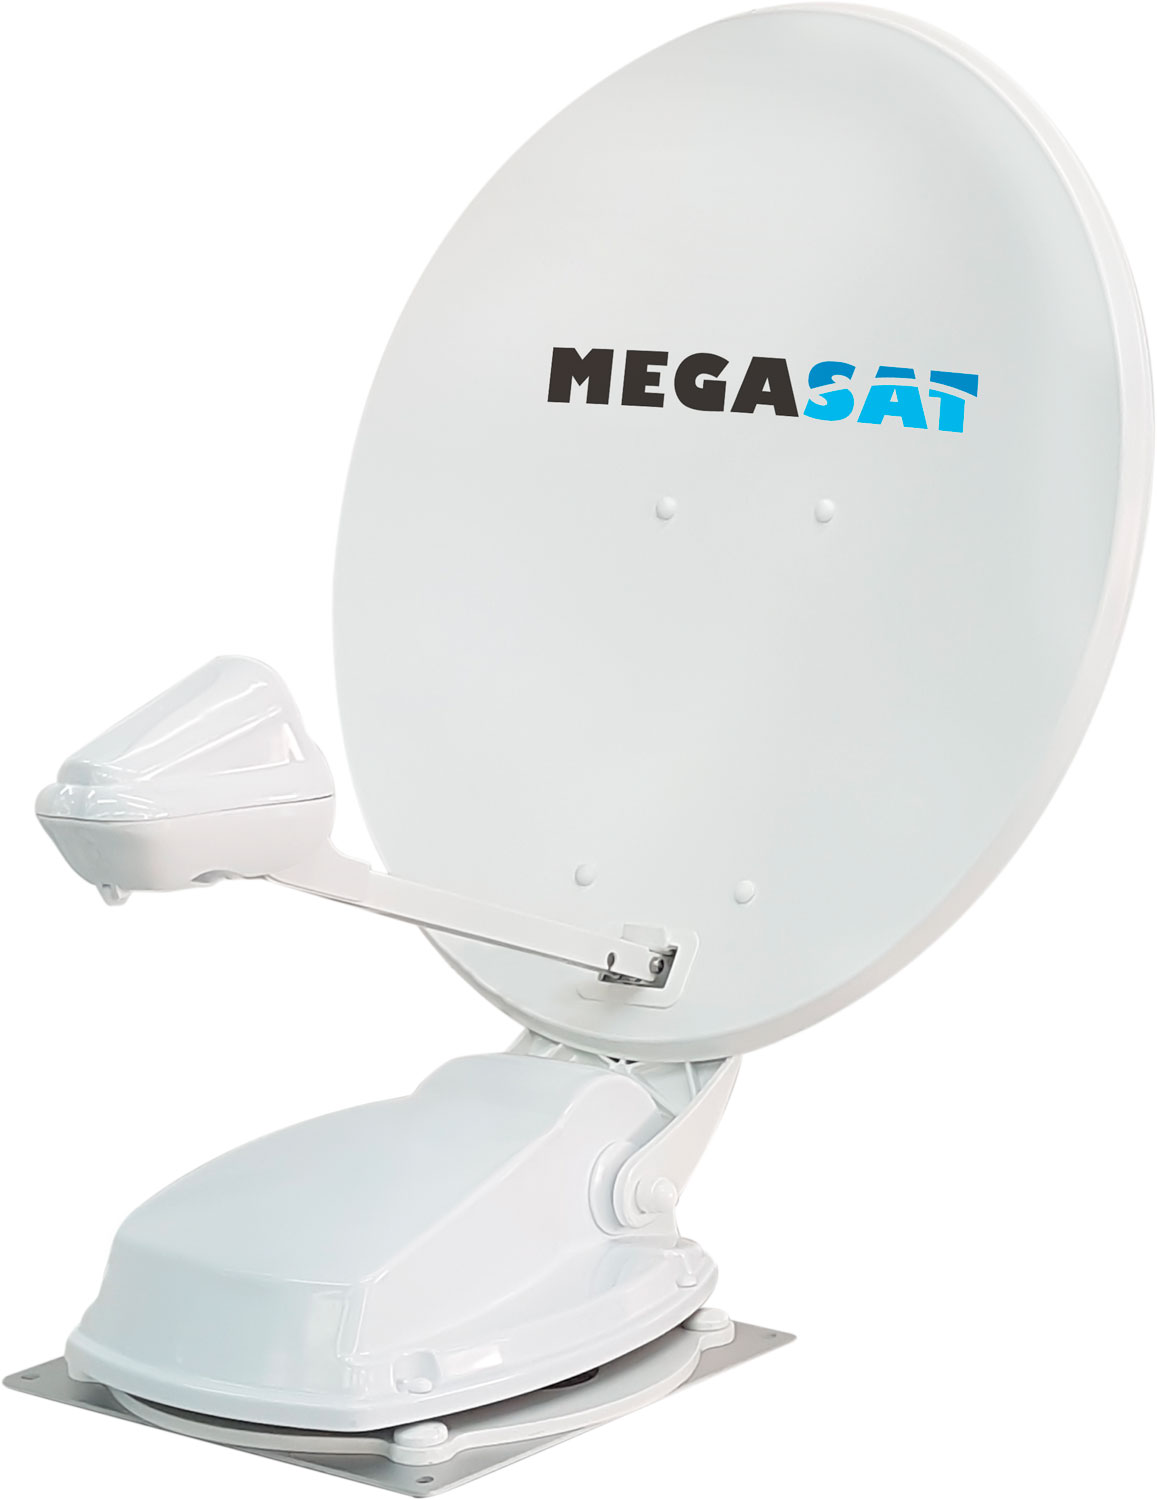 Megasat Caravanman 85 Professional V2 vollautomatische Twin-LNB Sat-Antenne